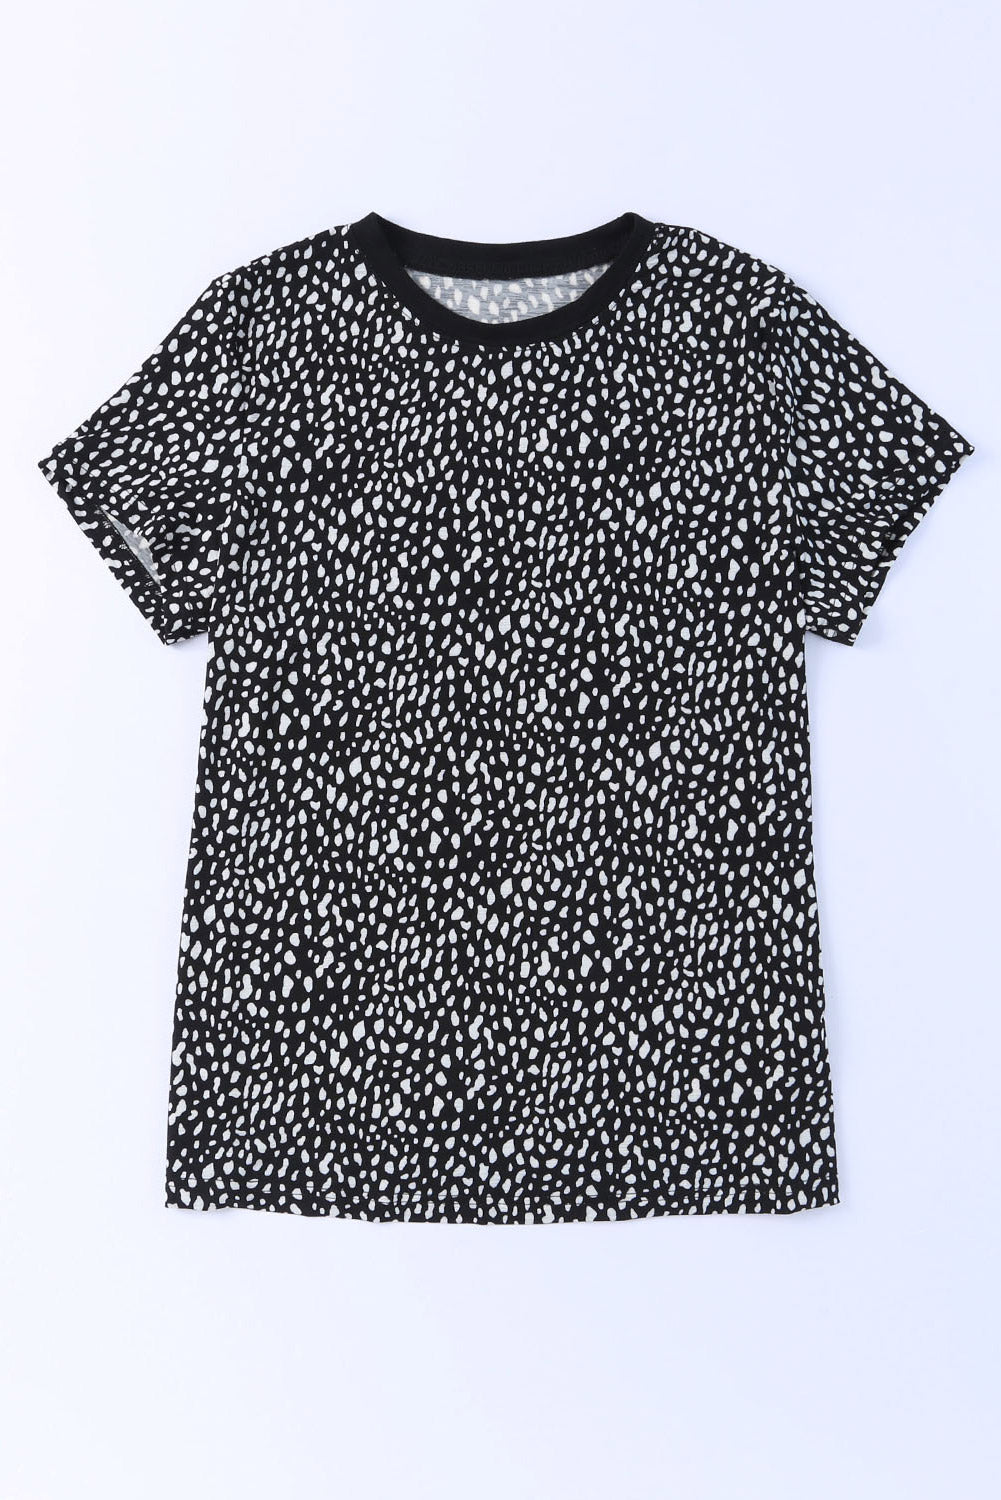 Red Cheetah Print Casual Short Sleeve Crew Neck T Shirt